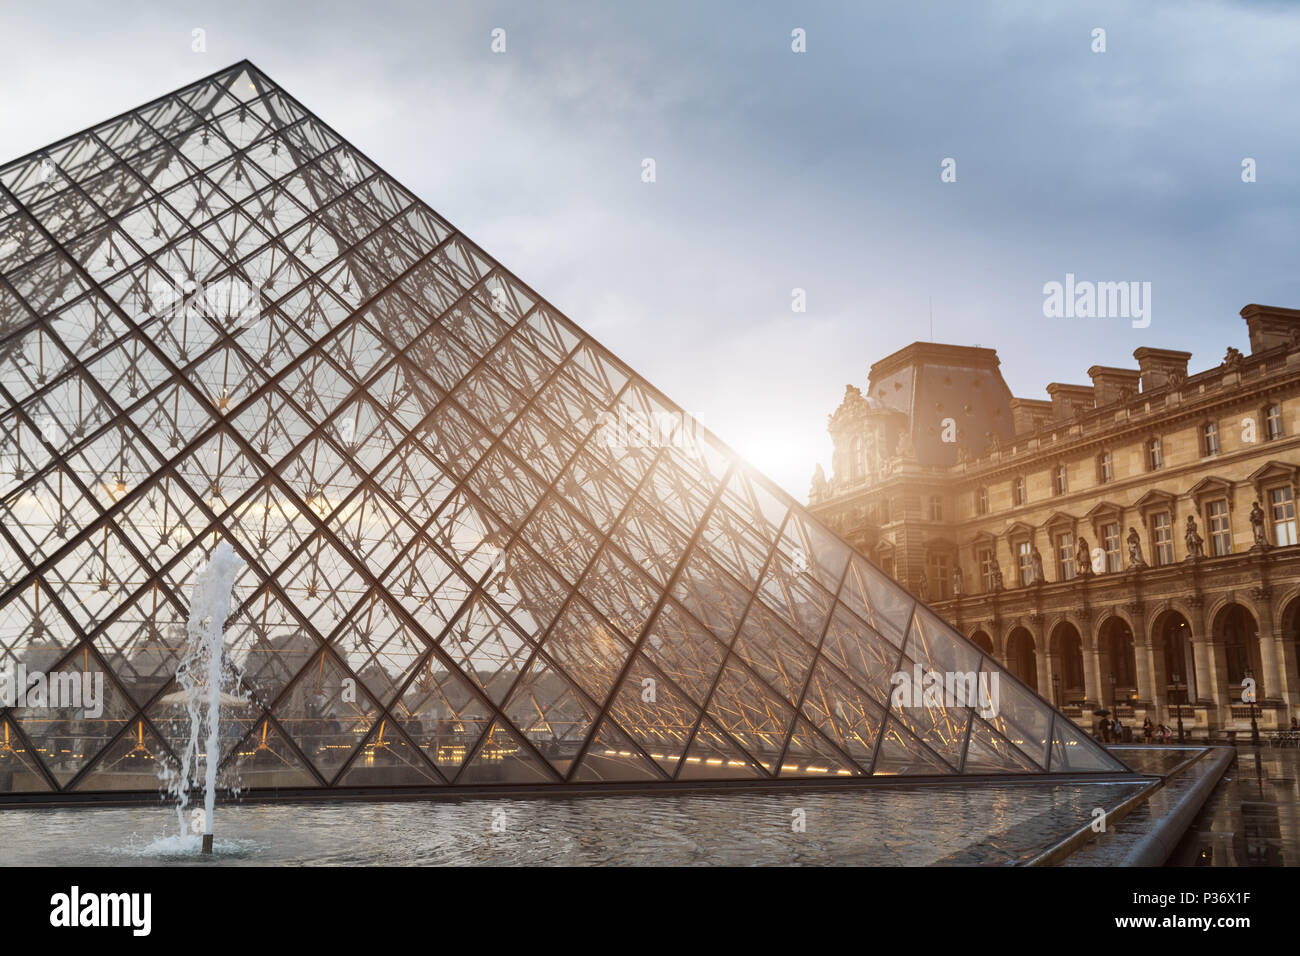 PARIS, FRANCE - June 01, 2018: View of famous Louvre Museum with Louvre ...